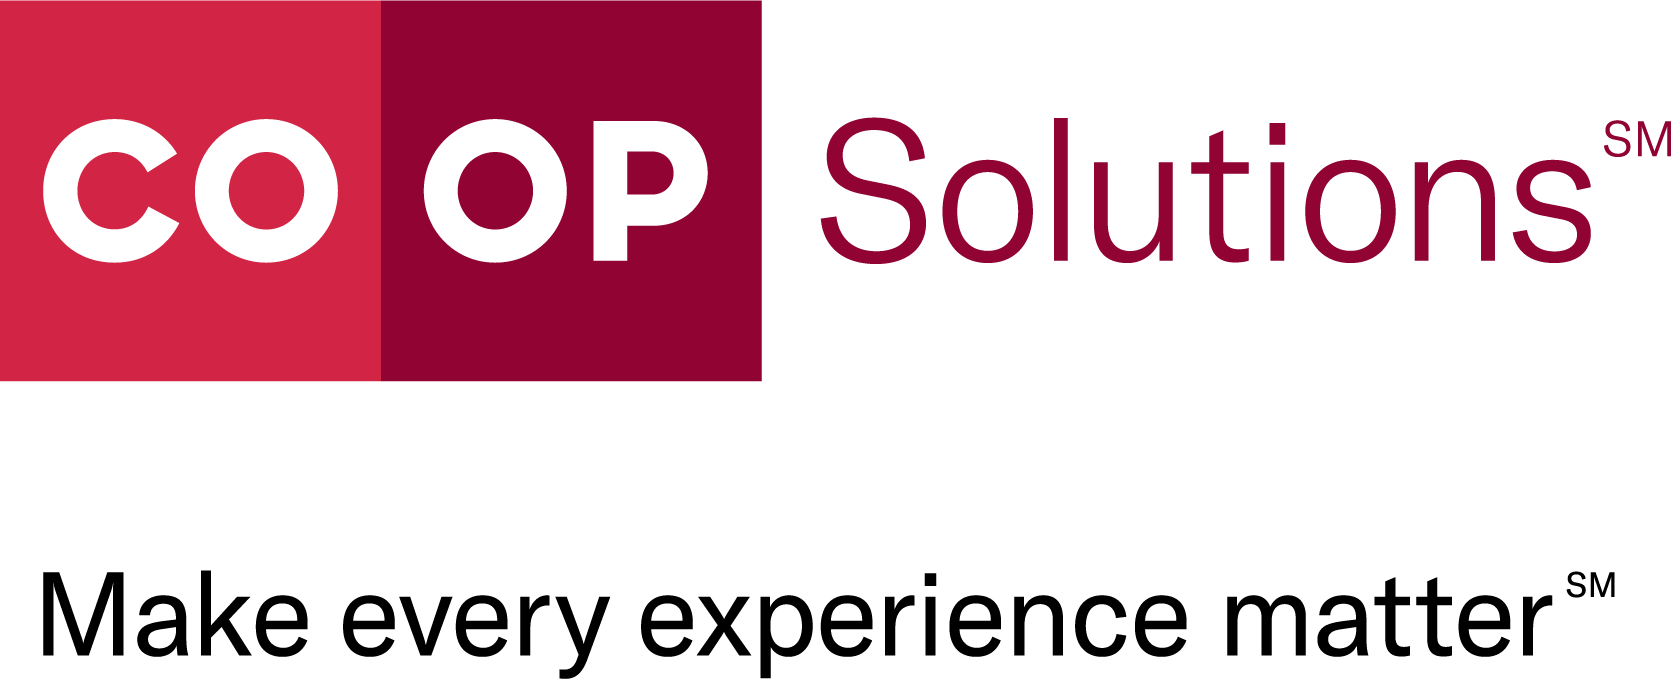 coop solutions logo